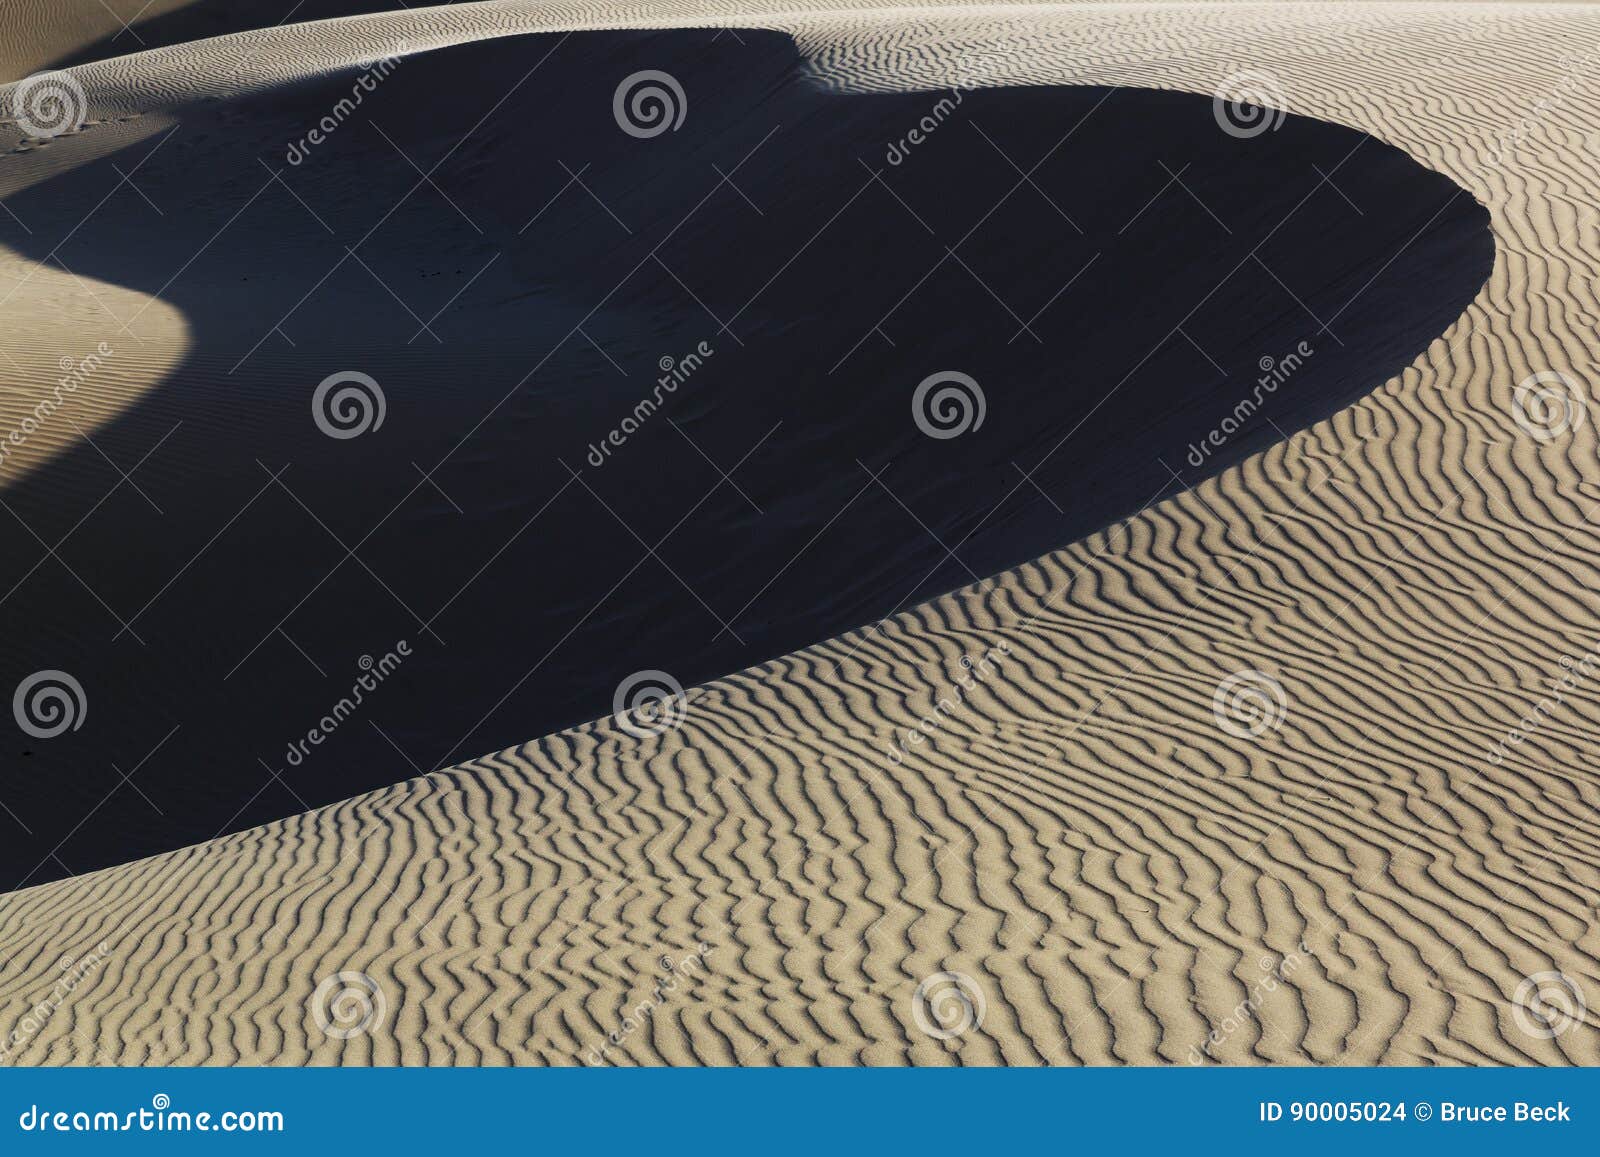 oceano dunes natural preserve, california